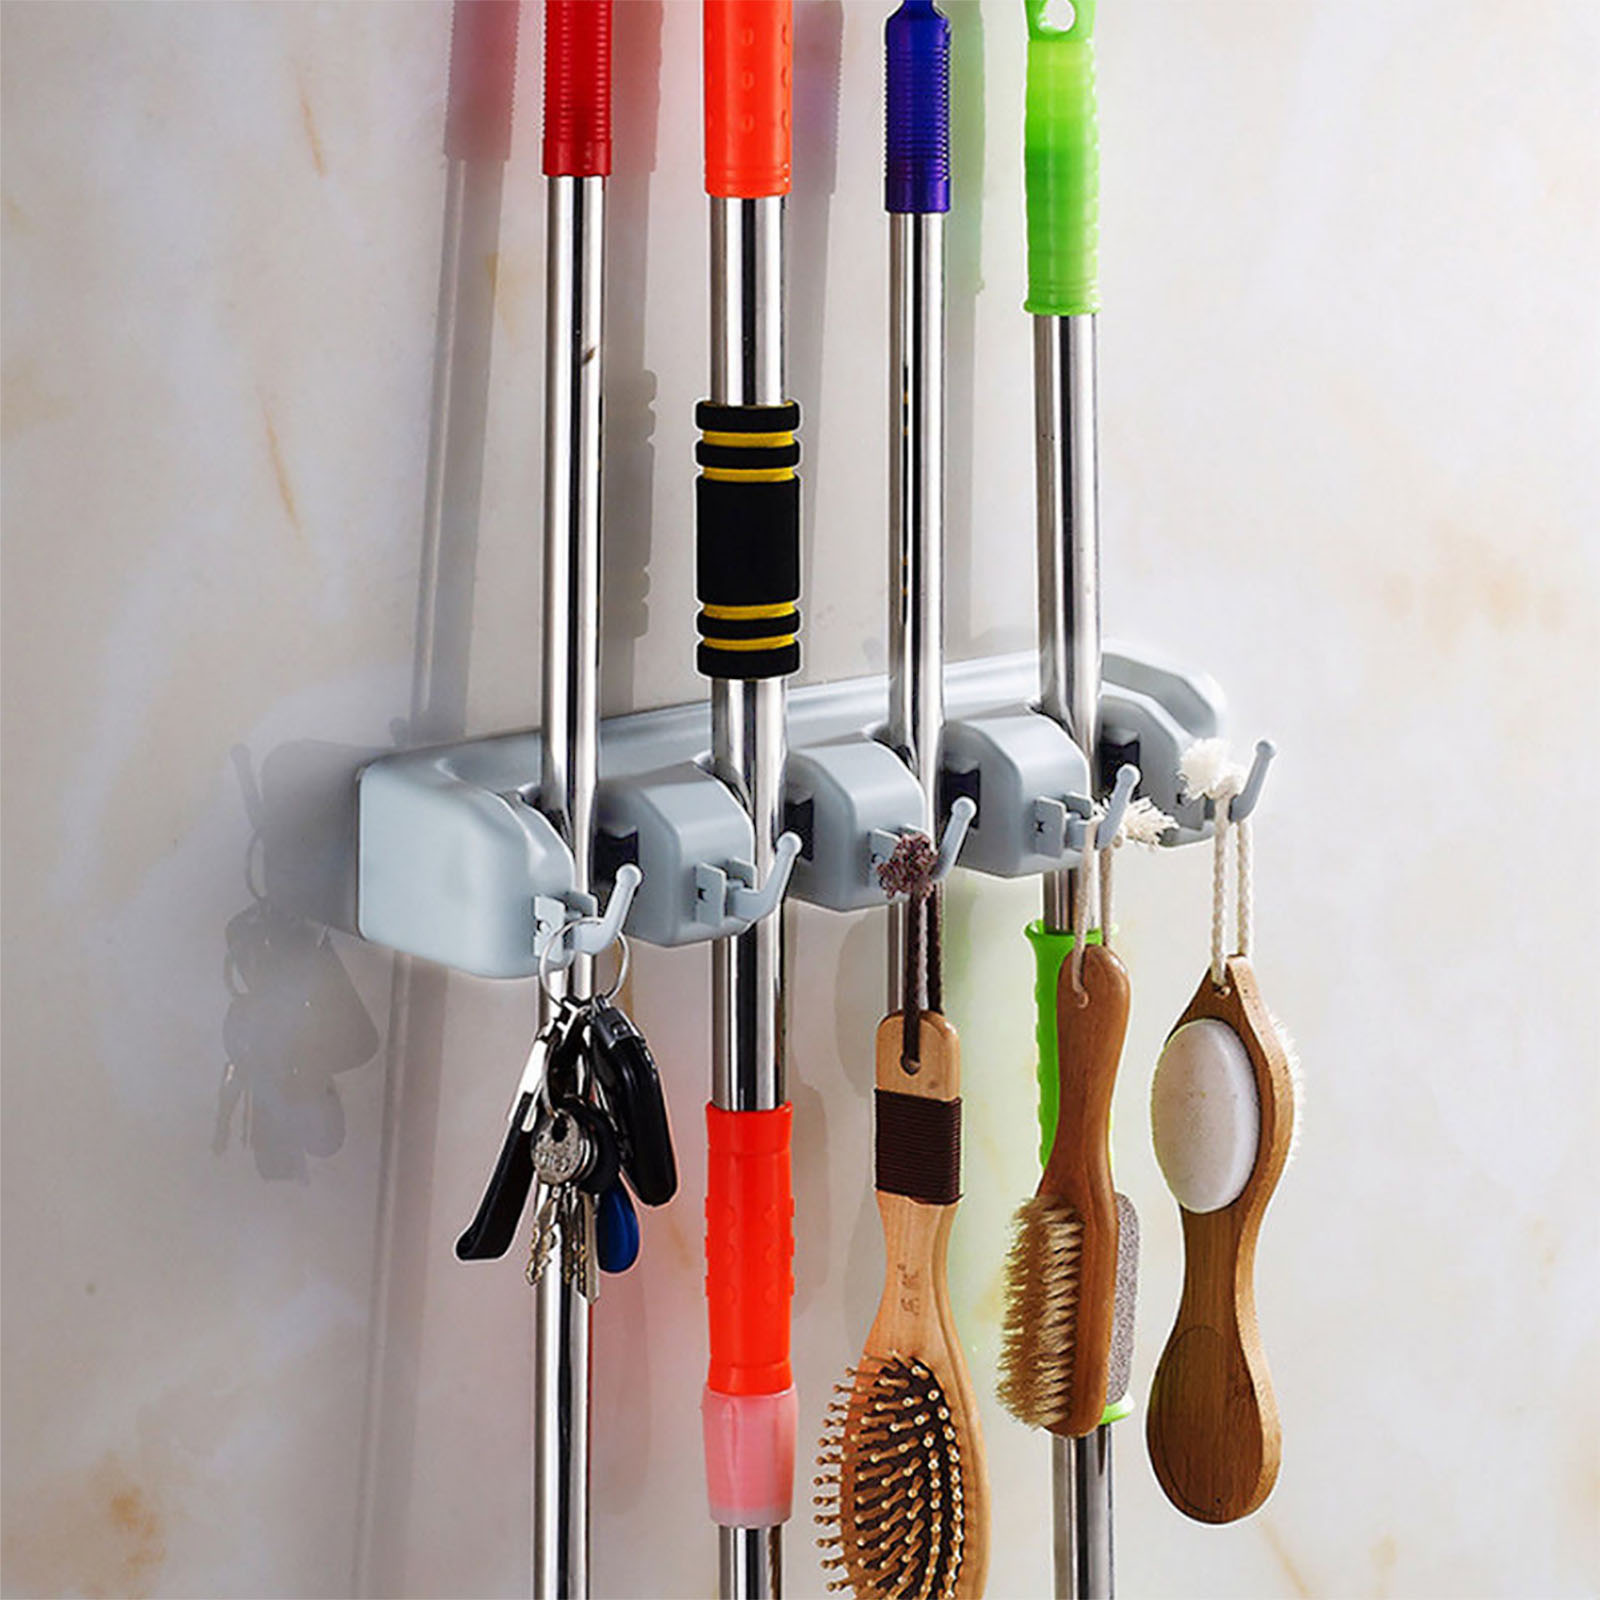 5 Position Mop Broom Organizer Wall Storage Mounted Holder Brush Hanger Rack Set | eBay1600 x 1600